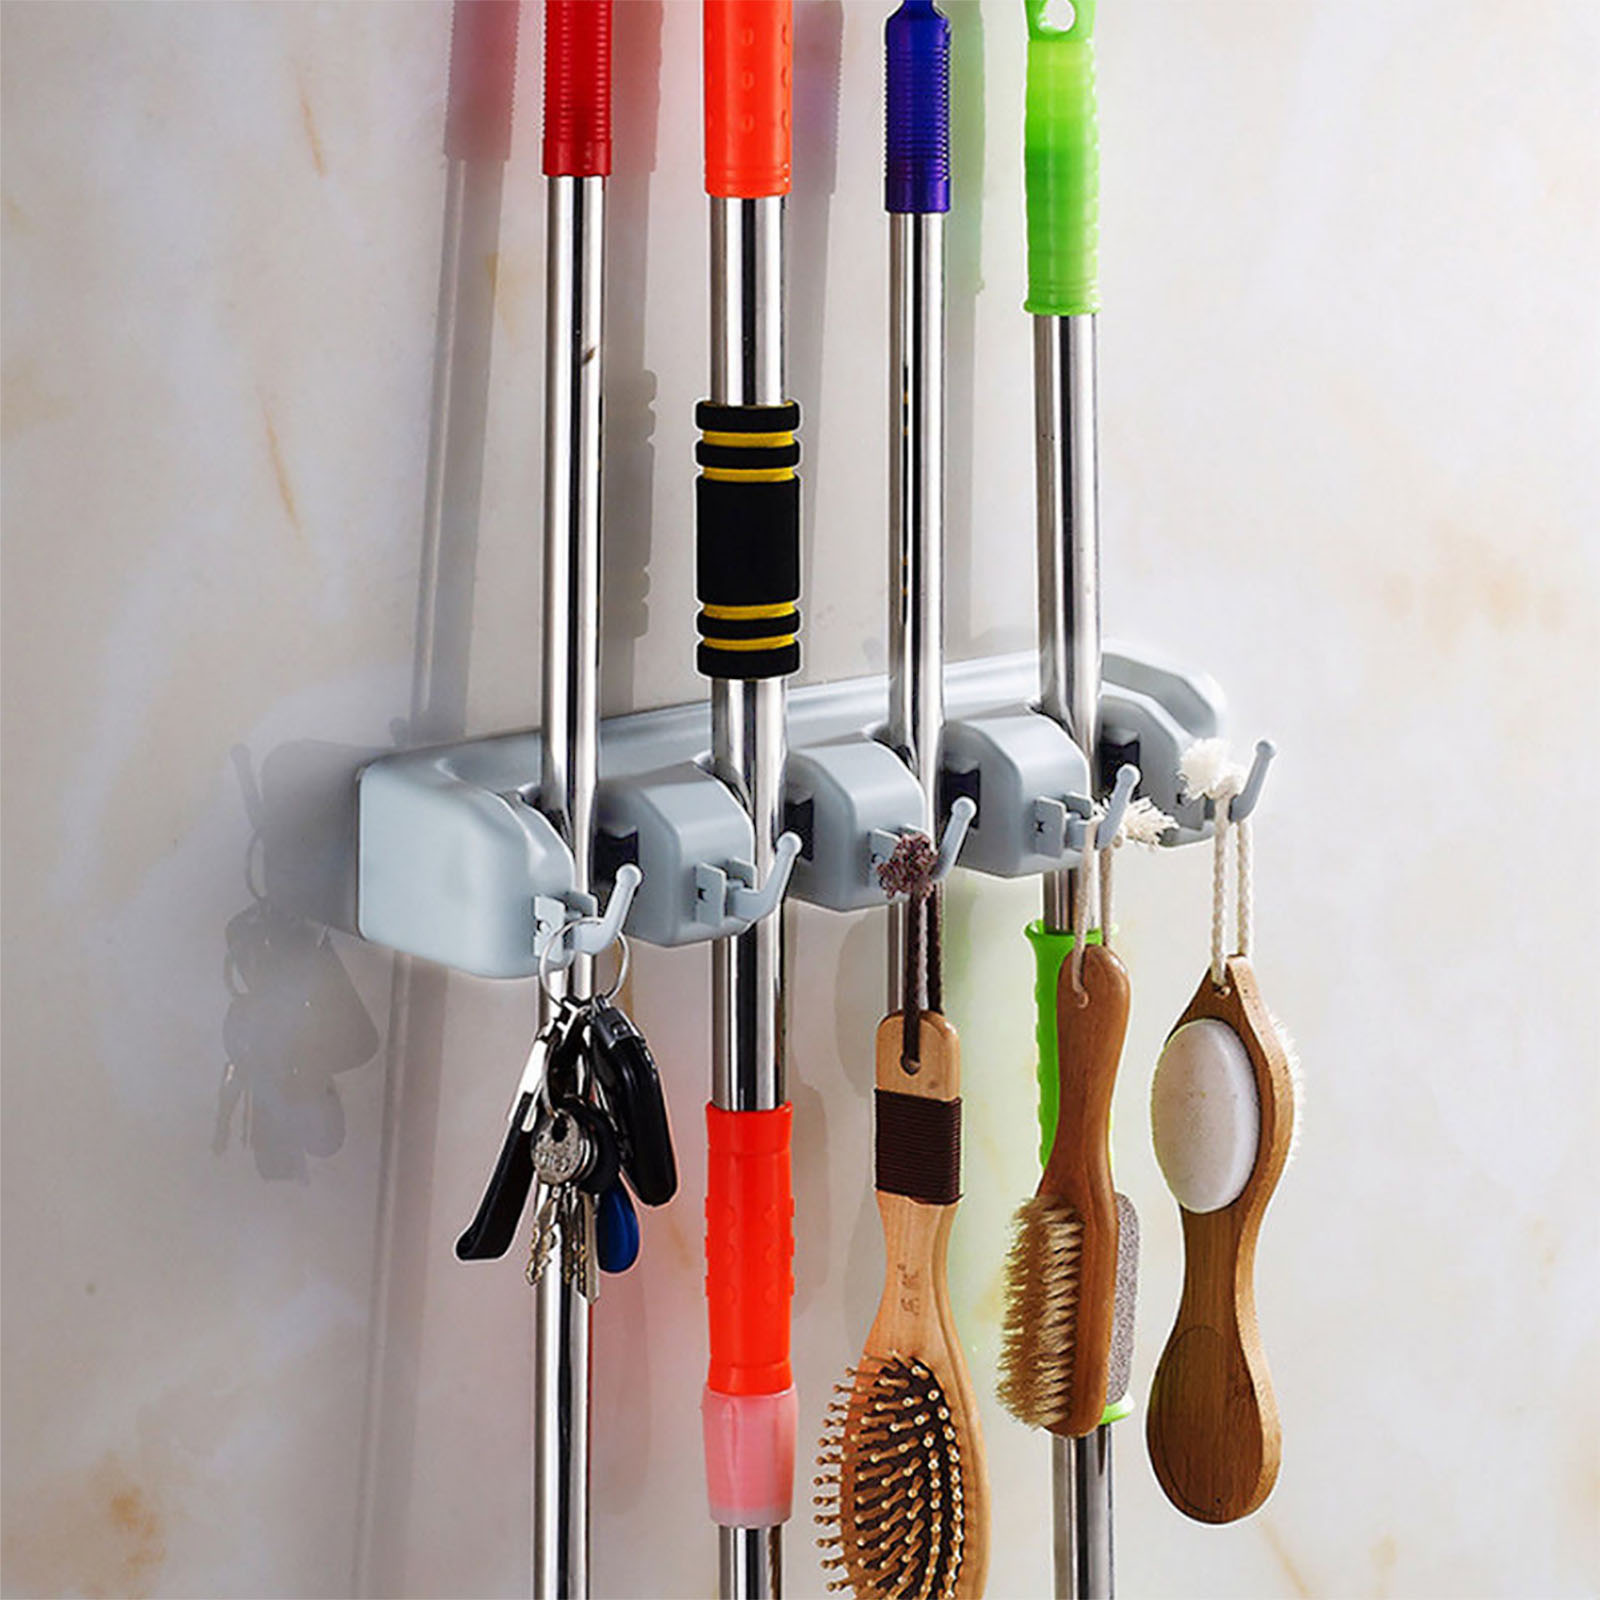 5 Position Mop Broom Organizer Wall Storage Mounted Holder Brush Hanger Rack Set | eBay1600 x 1600